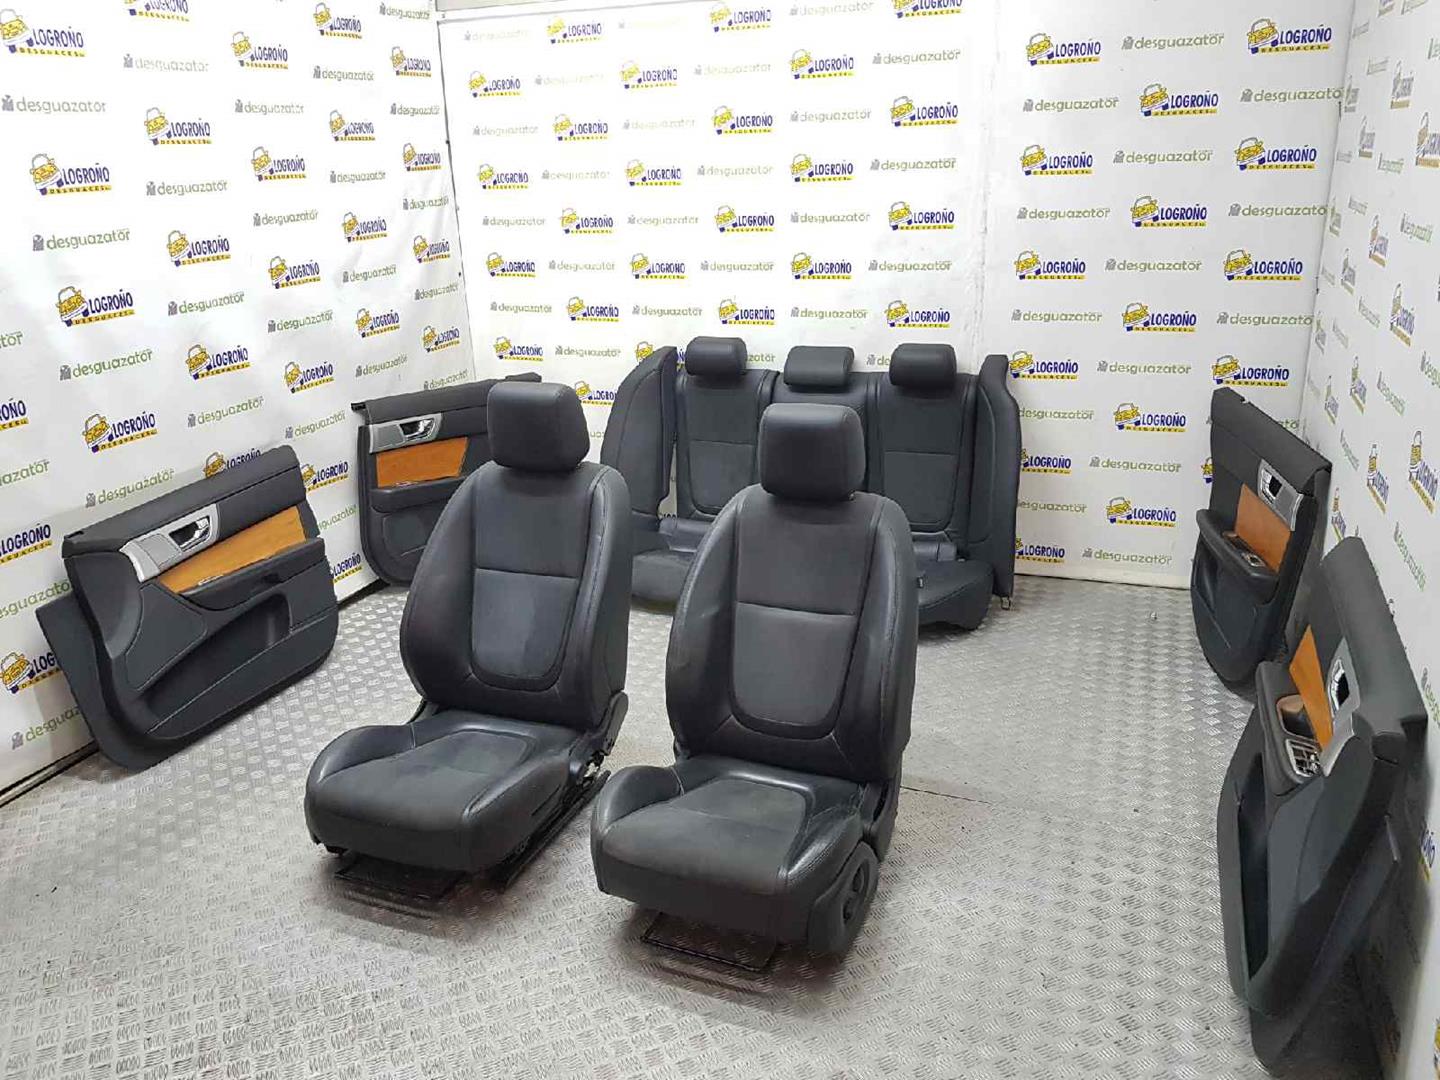 JAGUAR XF 1 generation  (2011-2016) Seats ASIENTOSDECUEROTELA, SEMIELECTRICOS, CONPANELESVERFOTOS 19676541